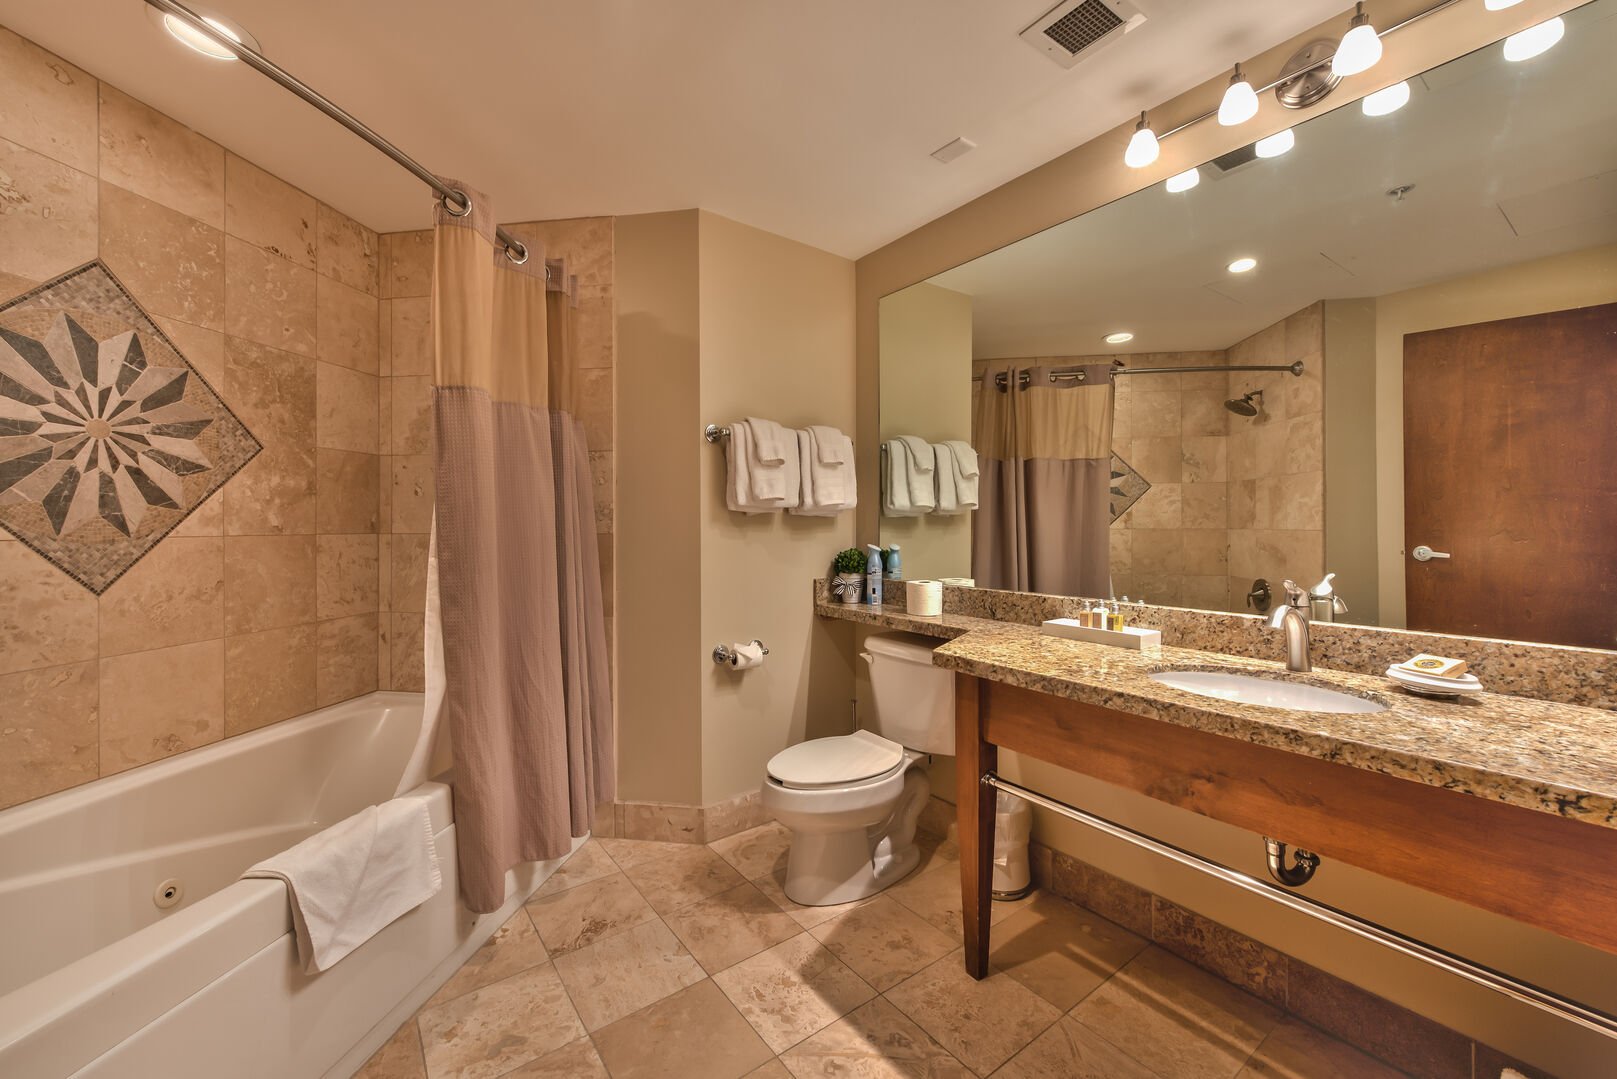 Superior bath w/ heated floors, jacuzzi tub, granite, natural stone